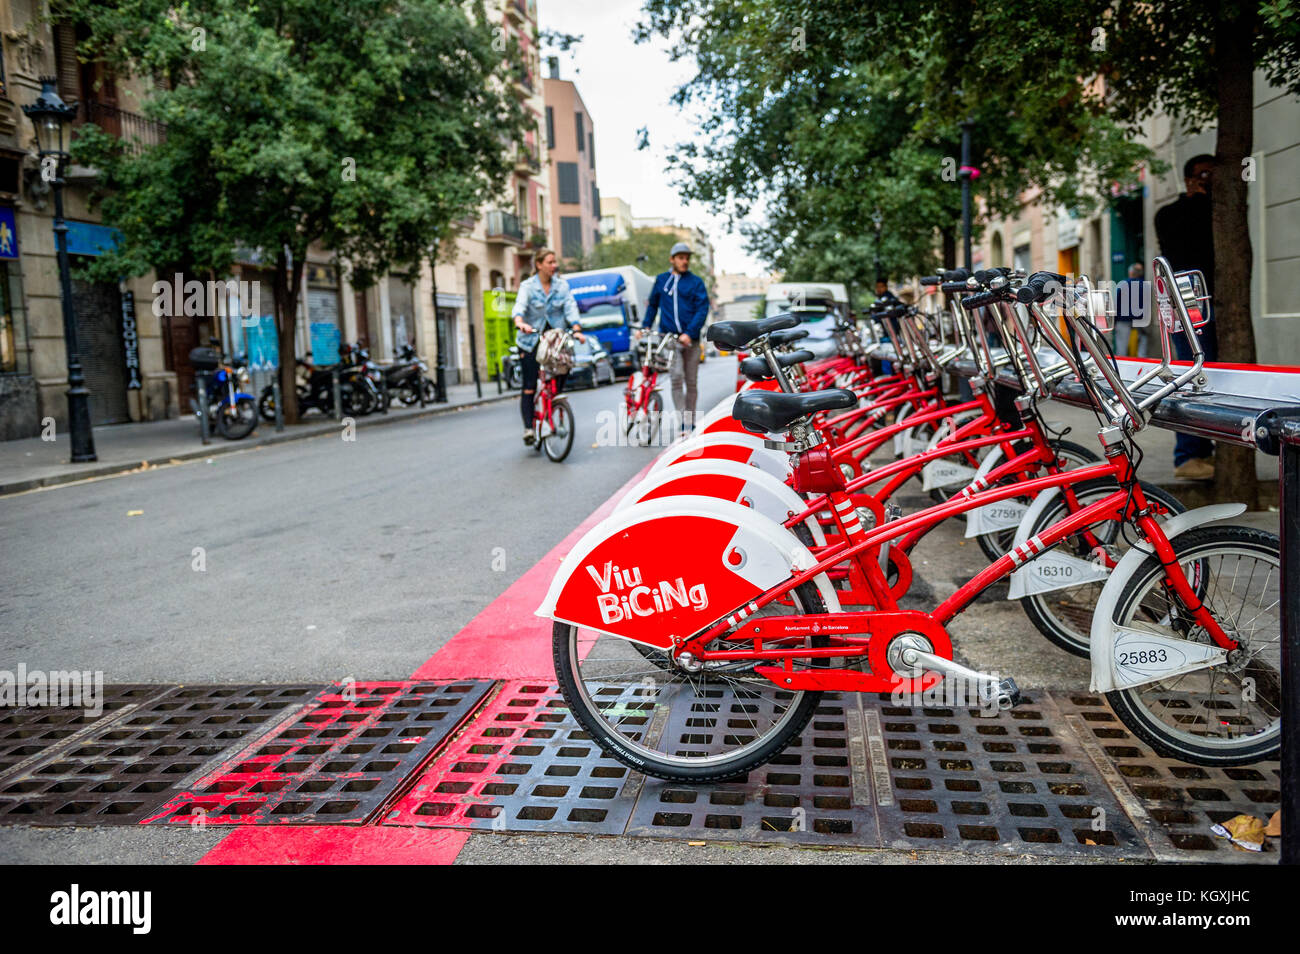 Viu BiCiNg, Barcelona City Bike Fahrradverleih Stockfotografie - Alamy